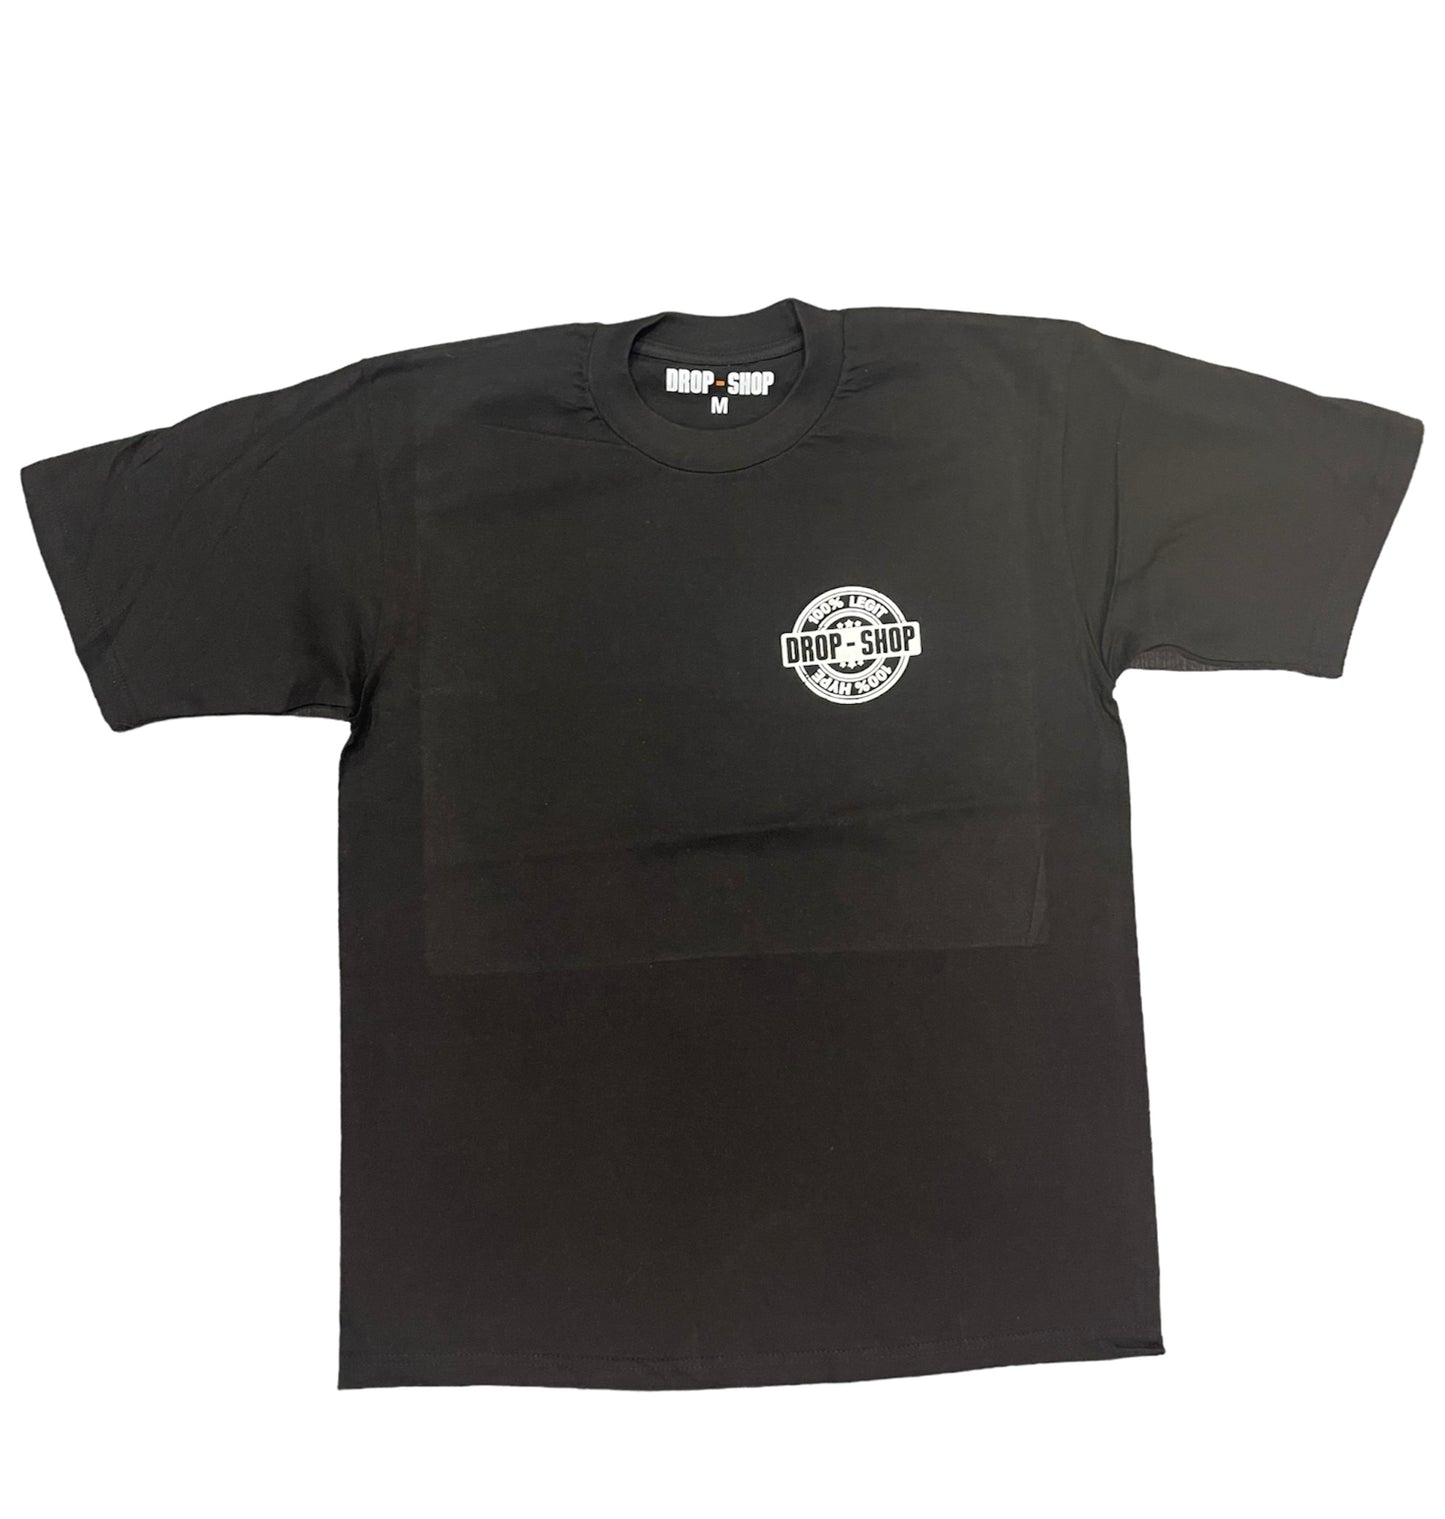 Drop Shop Certified Black Tshirt